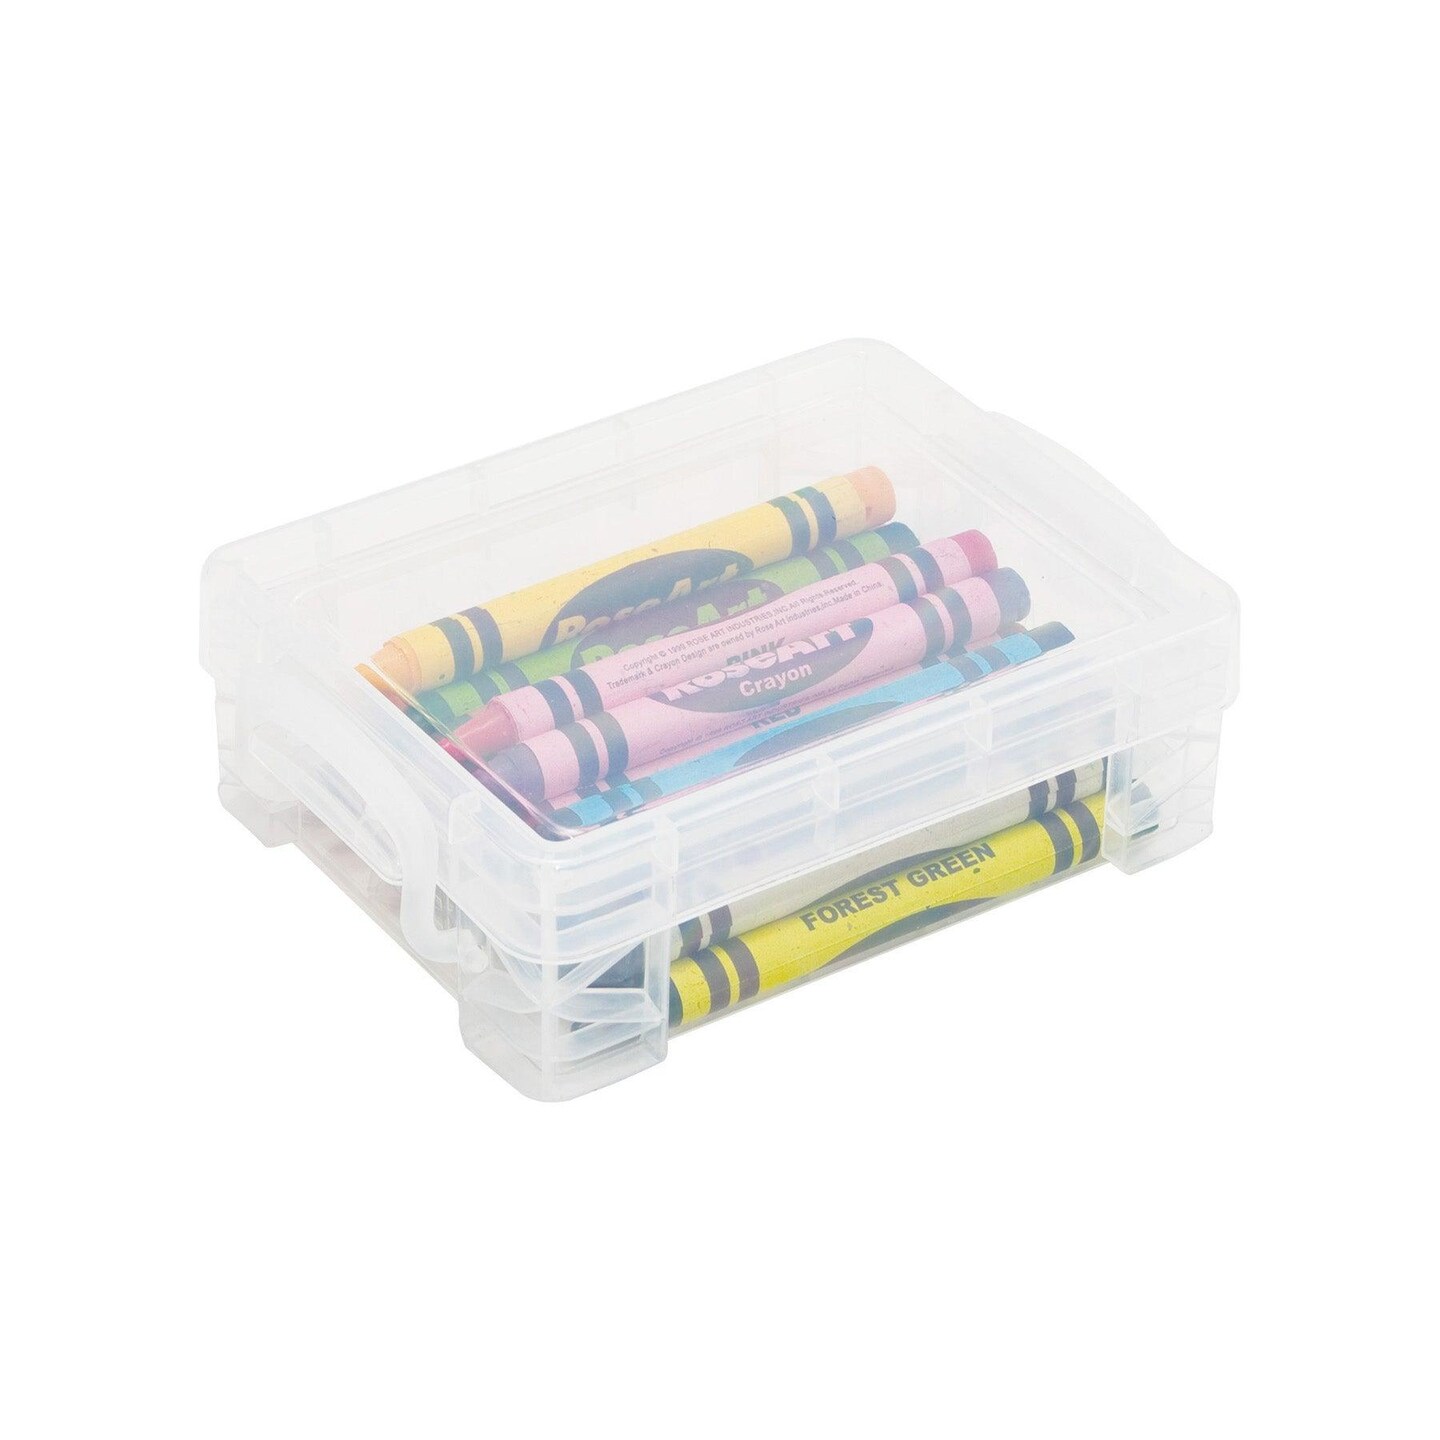 9 pack Storage Box, School Supplies Super StackerCrayon Box, Clear Storage Organizer - Stackable Boxes